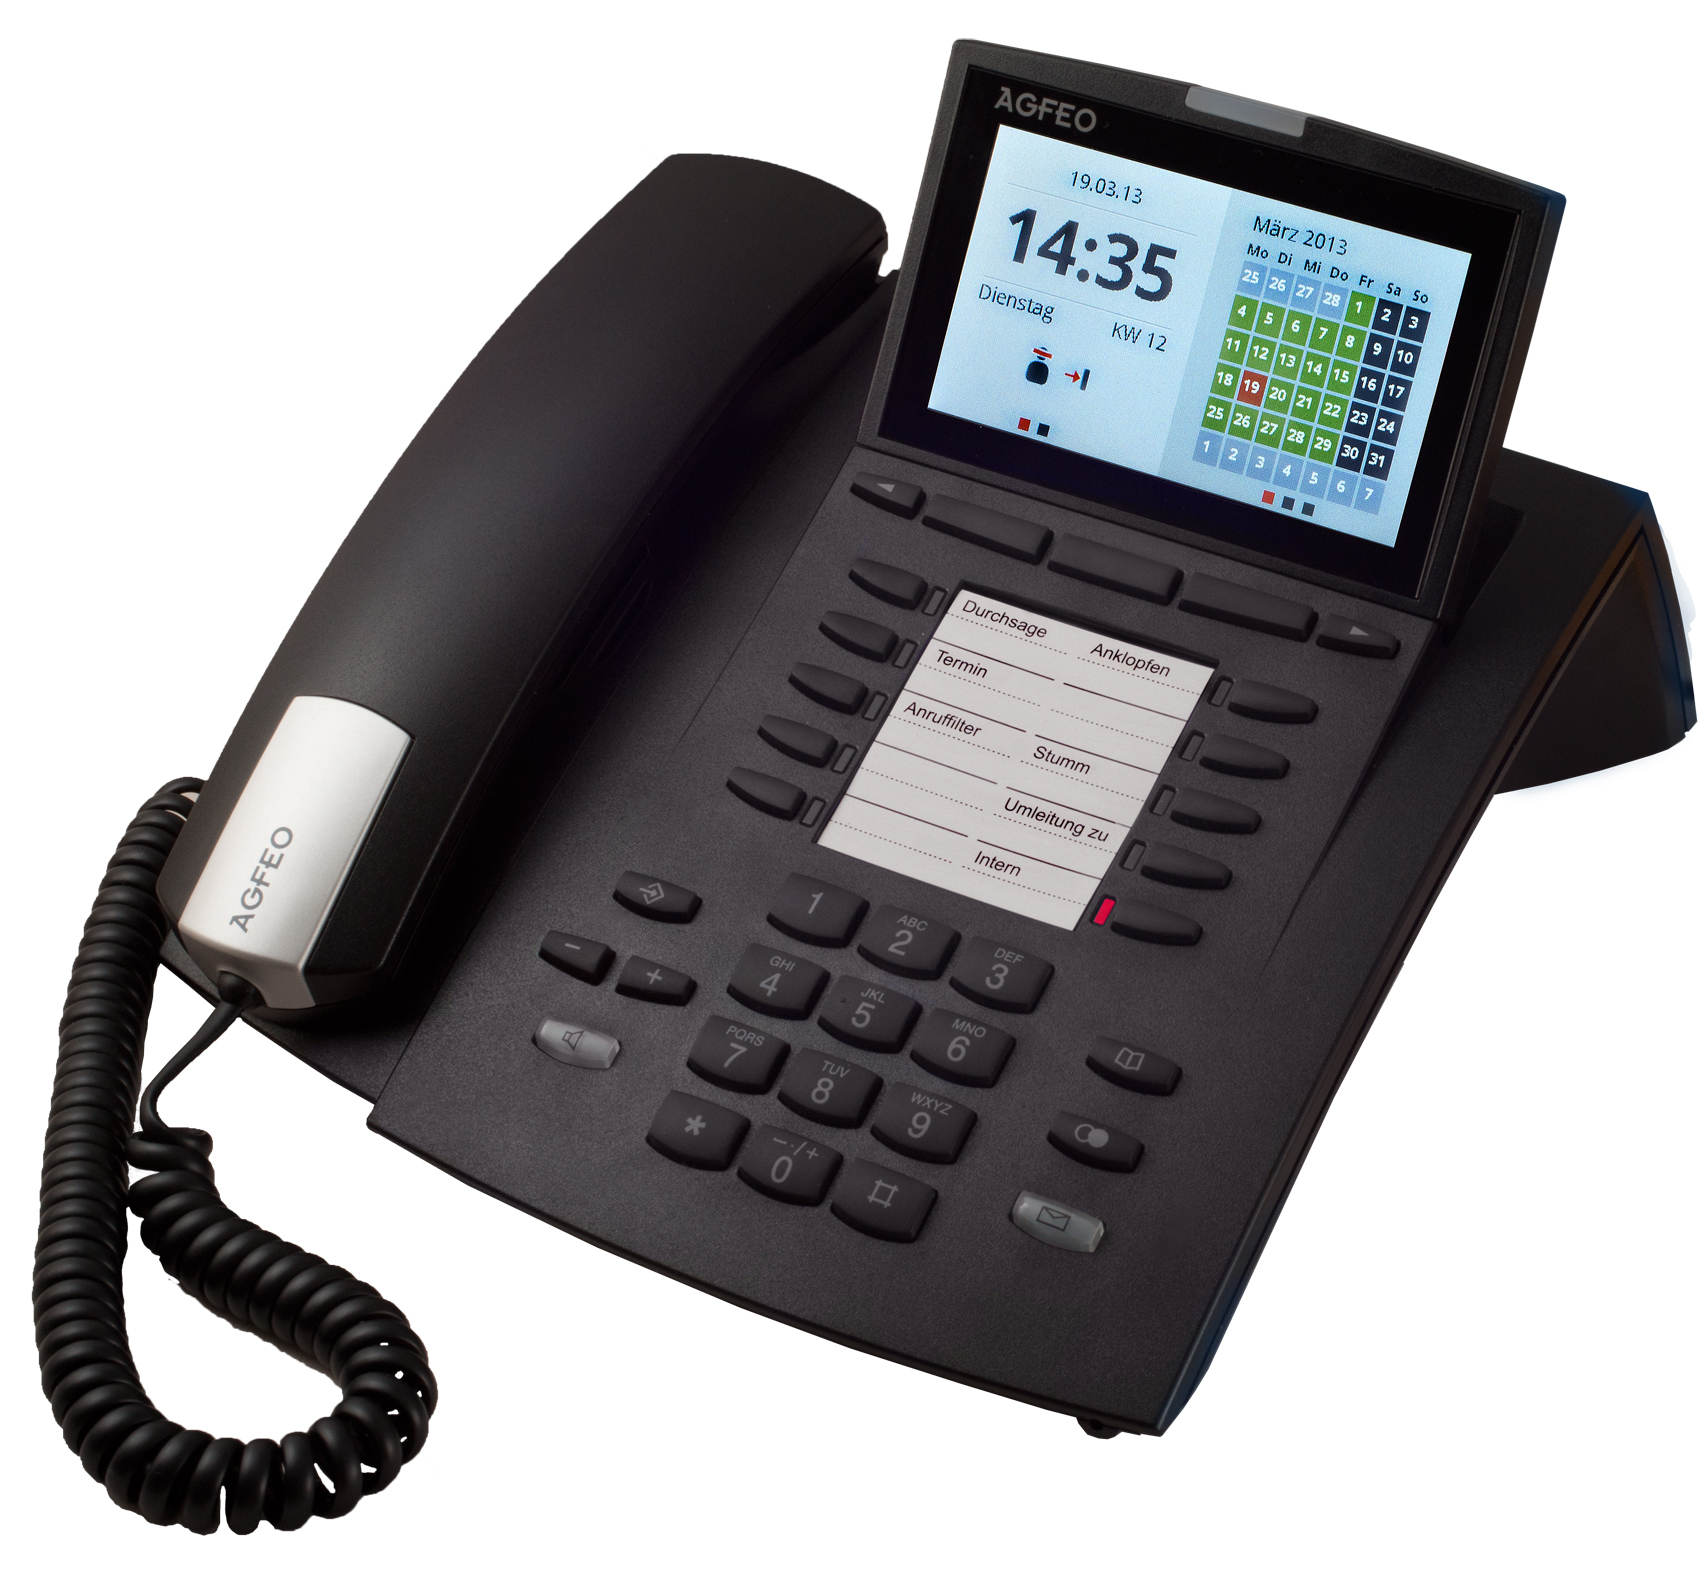 6101322 AGFEO ST 45 IP - IP Phone - Black - Wired handset - 1000 entries - Digital - LCD